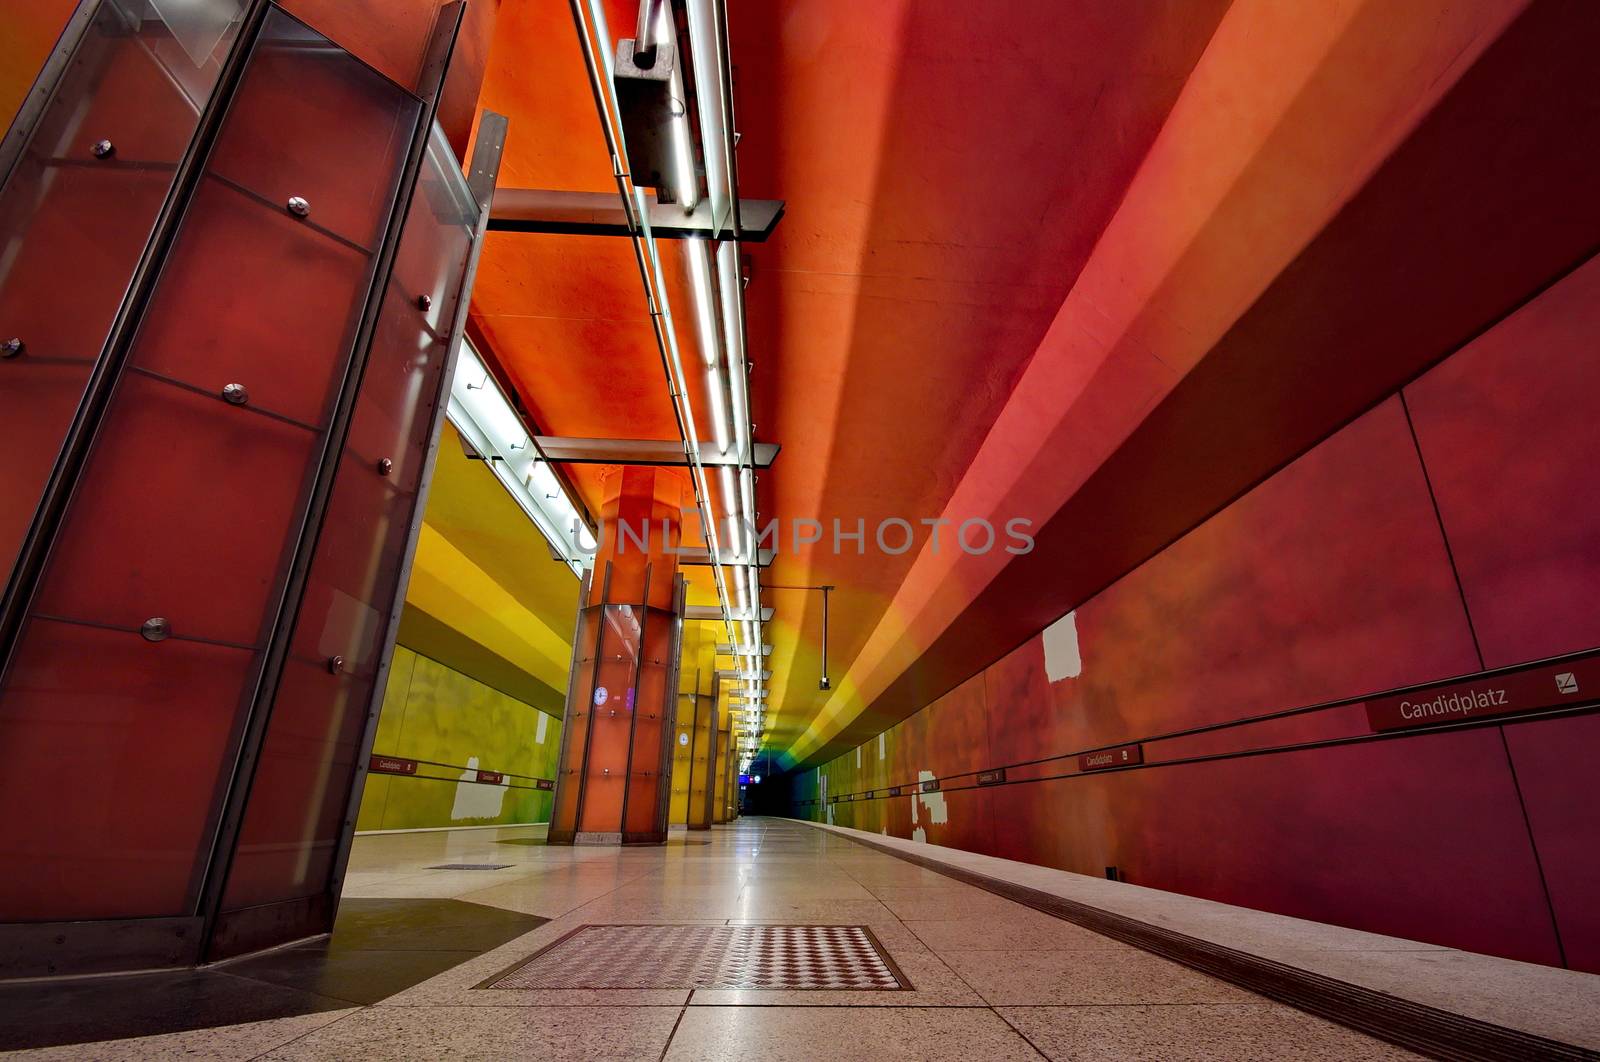 Candidplatz subway station in Munich, Germany by anderm